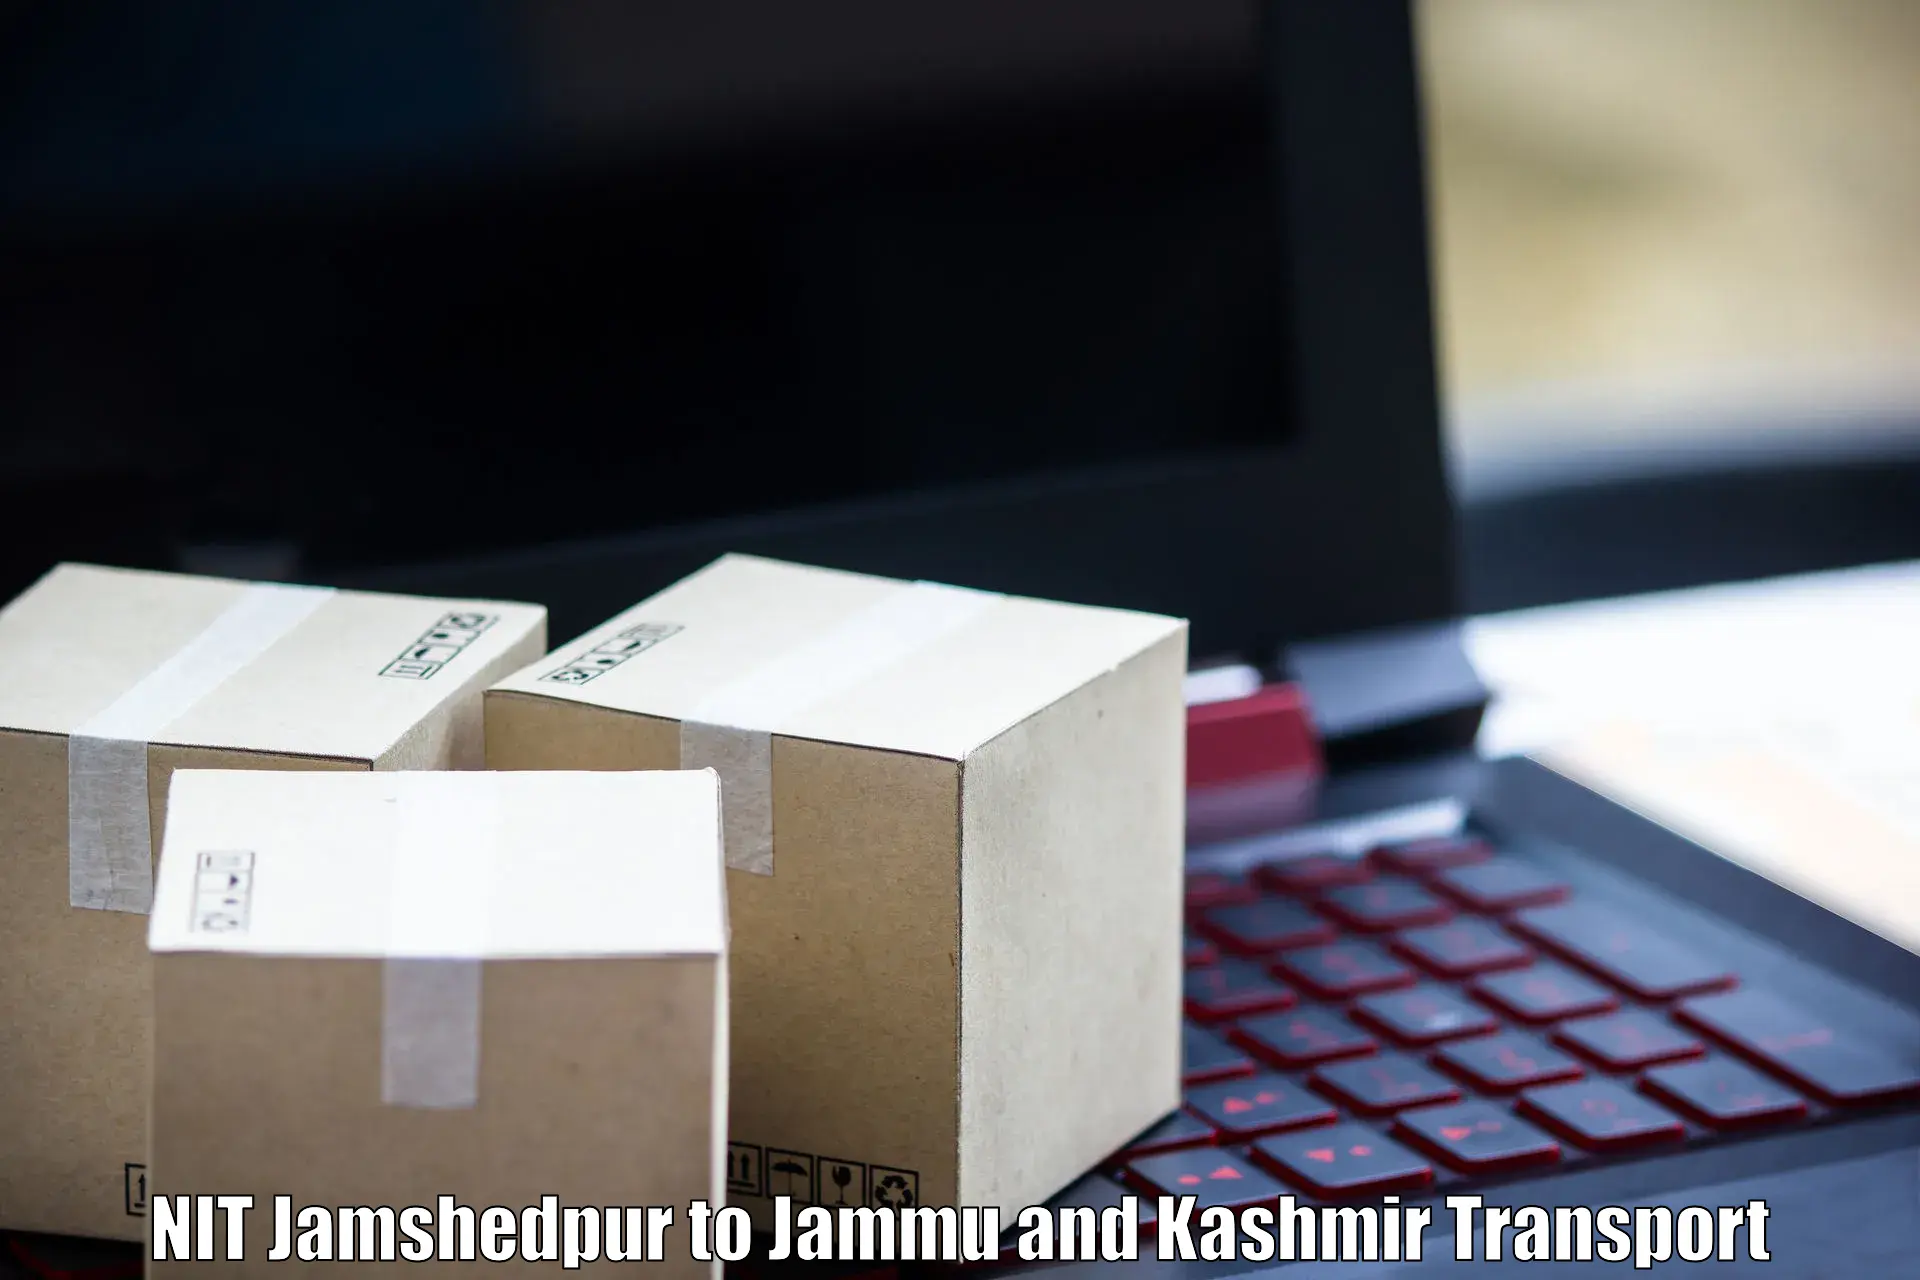 Online transport service NIT Jamshedpur to Bhaderwah